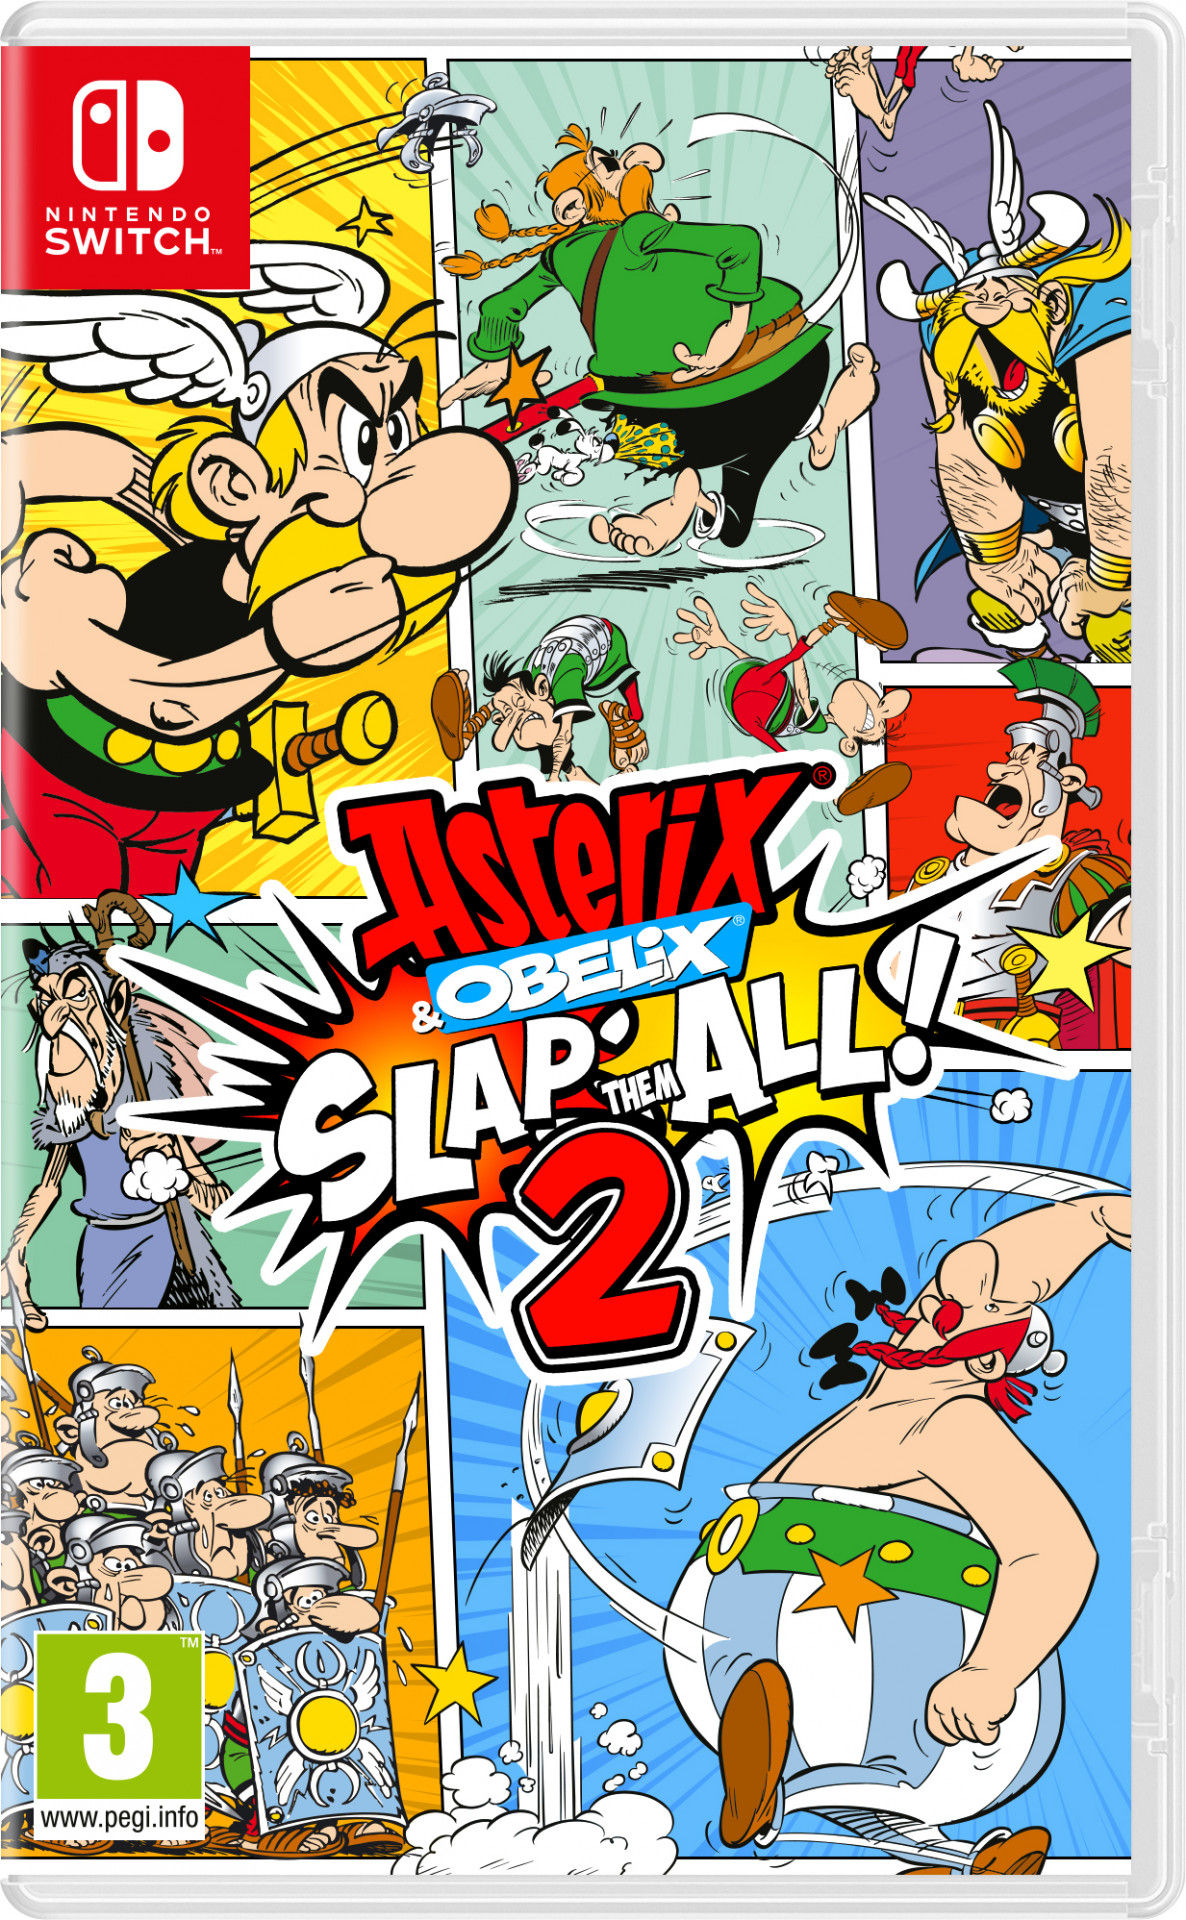 asterix-obelix-slap-them-all-2-nintendo-switch